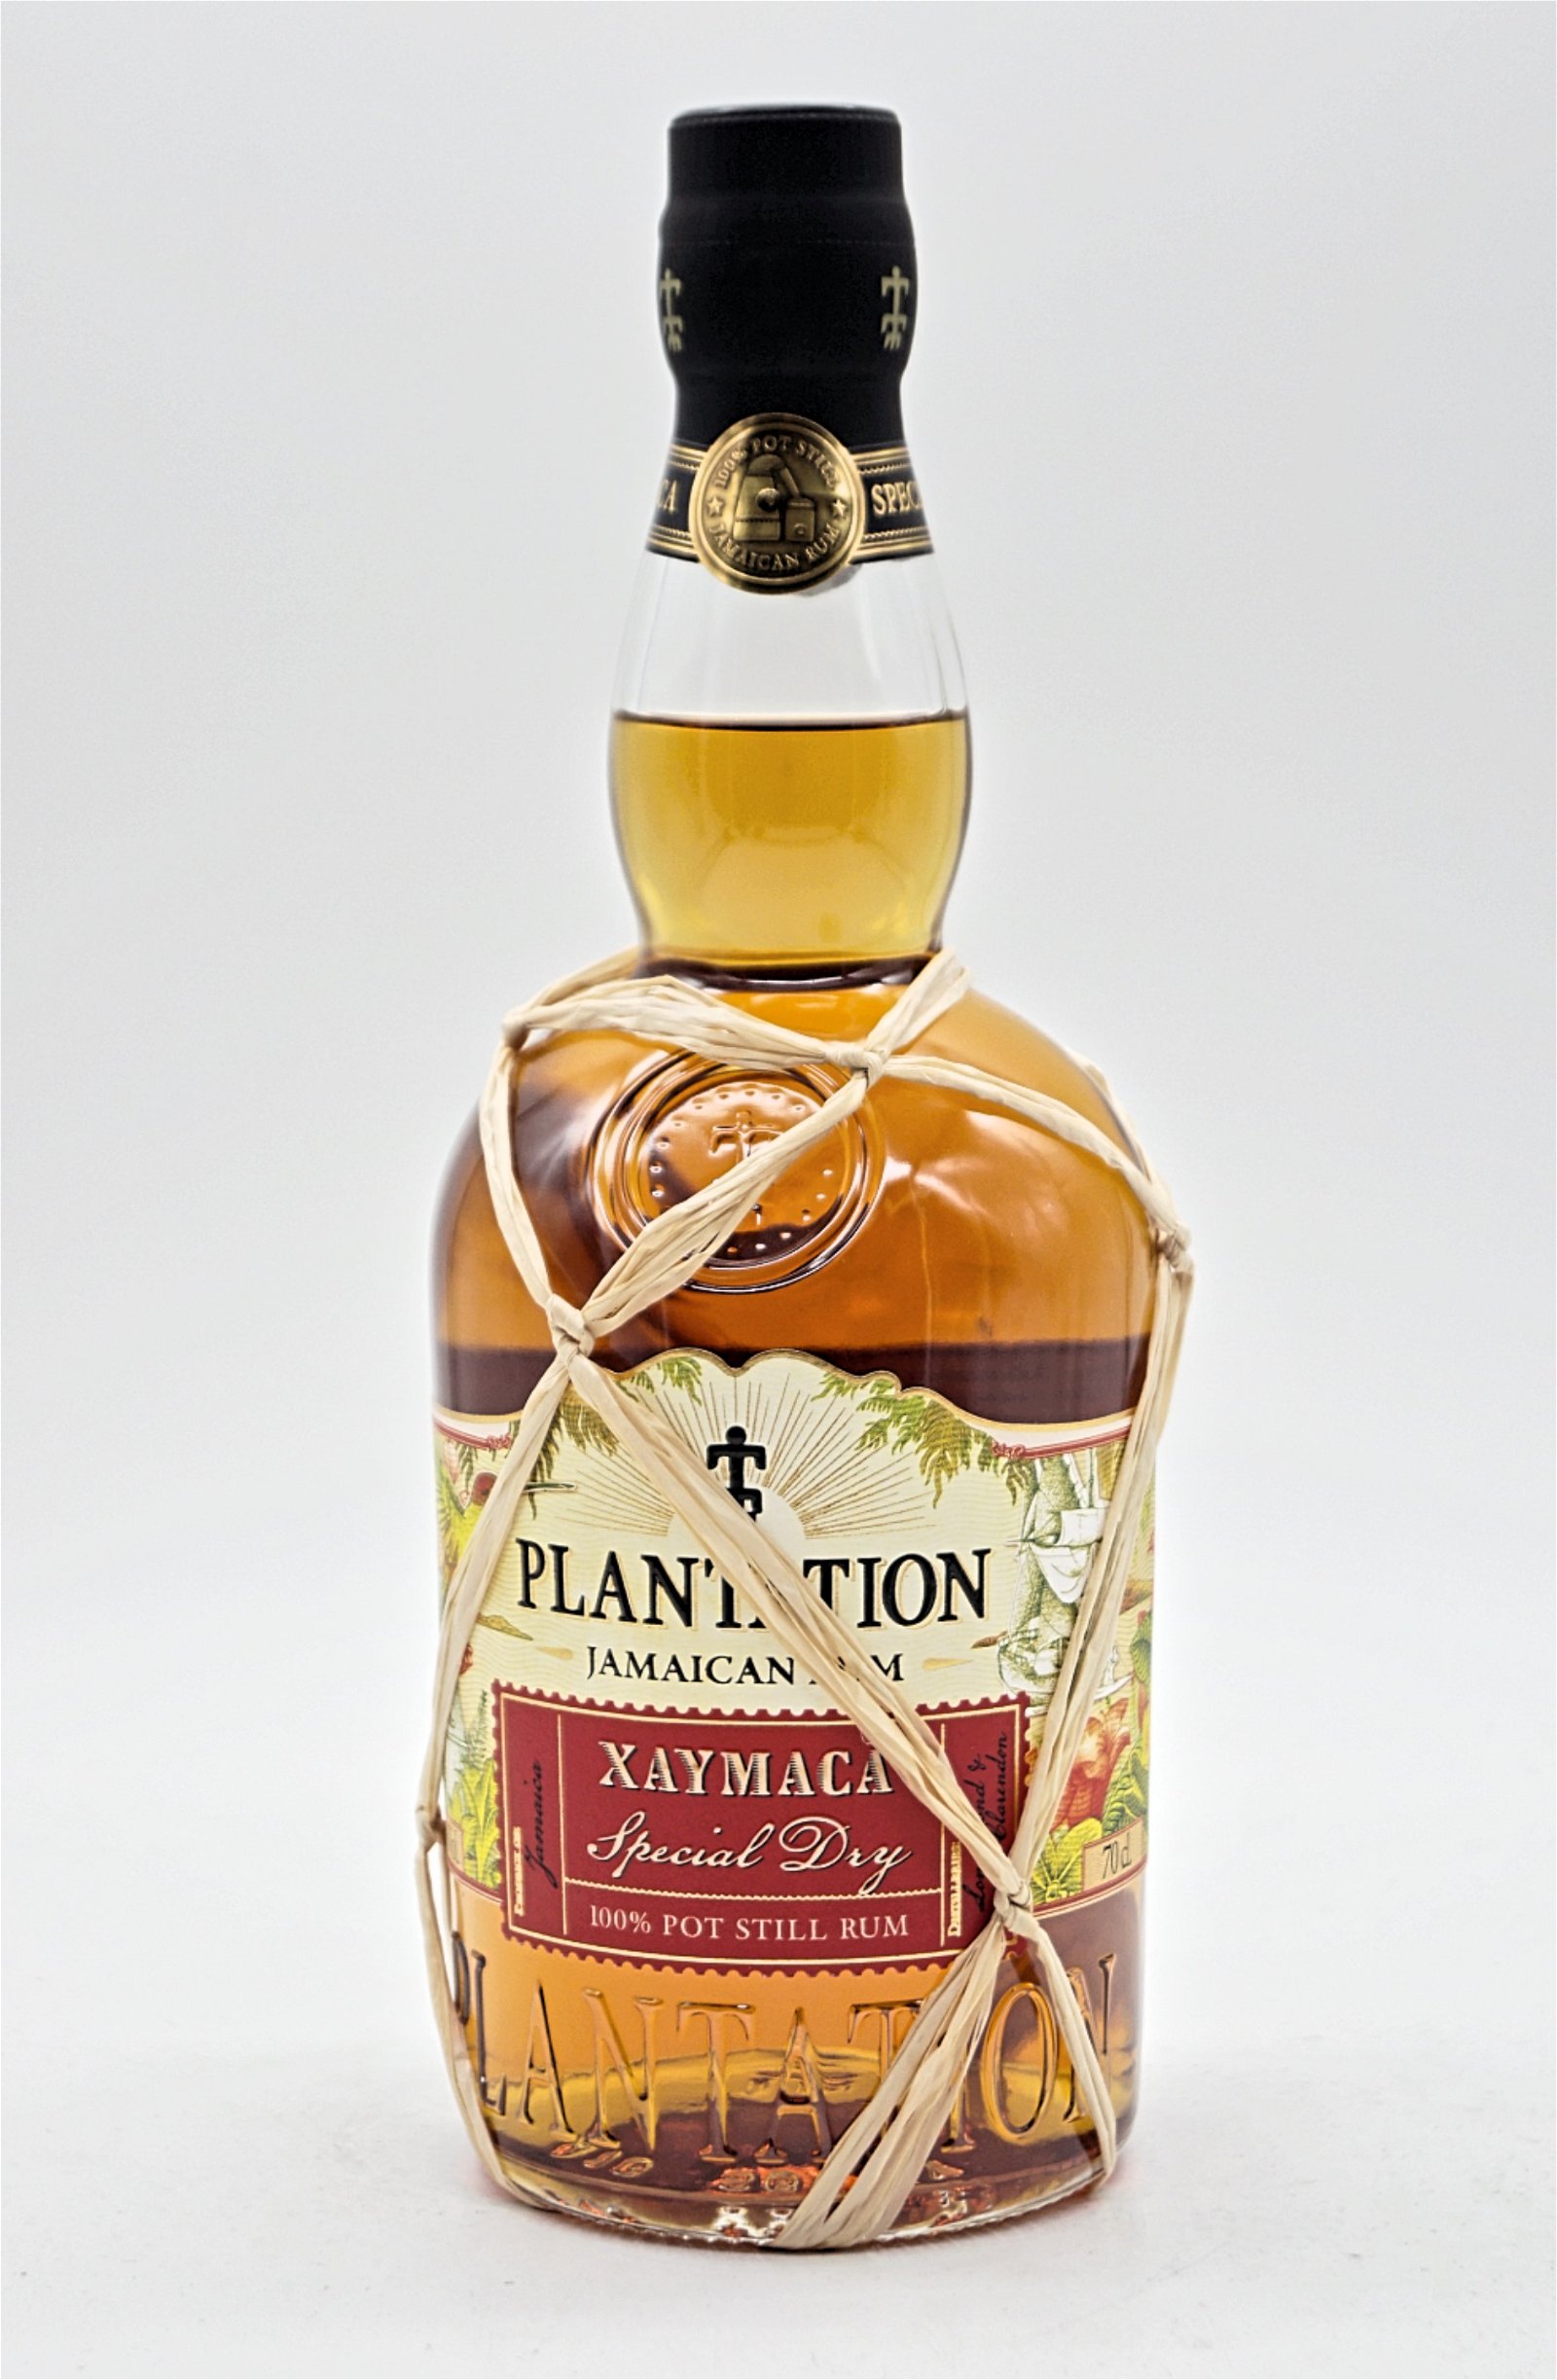 Plantation Rum Xaymaca Special Dry Jamaican Rum